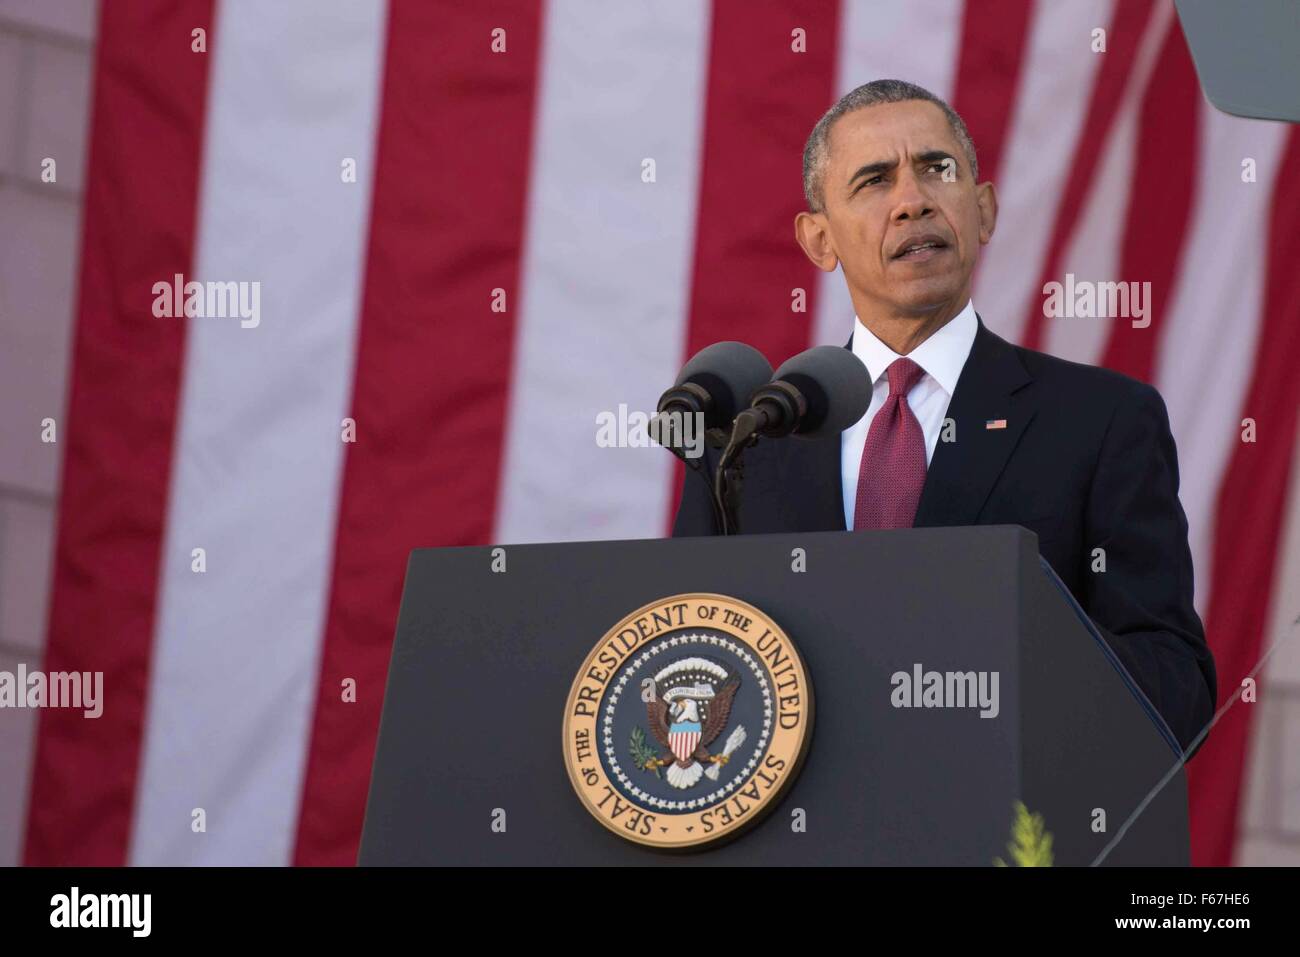 US-Präsident Barack Obama gibt die traditionelle Veterans Day-Adresse am Memorial Amphitheater Arlington National Cemetery 11. November 2015 in Arlington, Virginia. Stockfoto